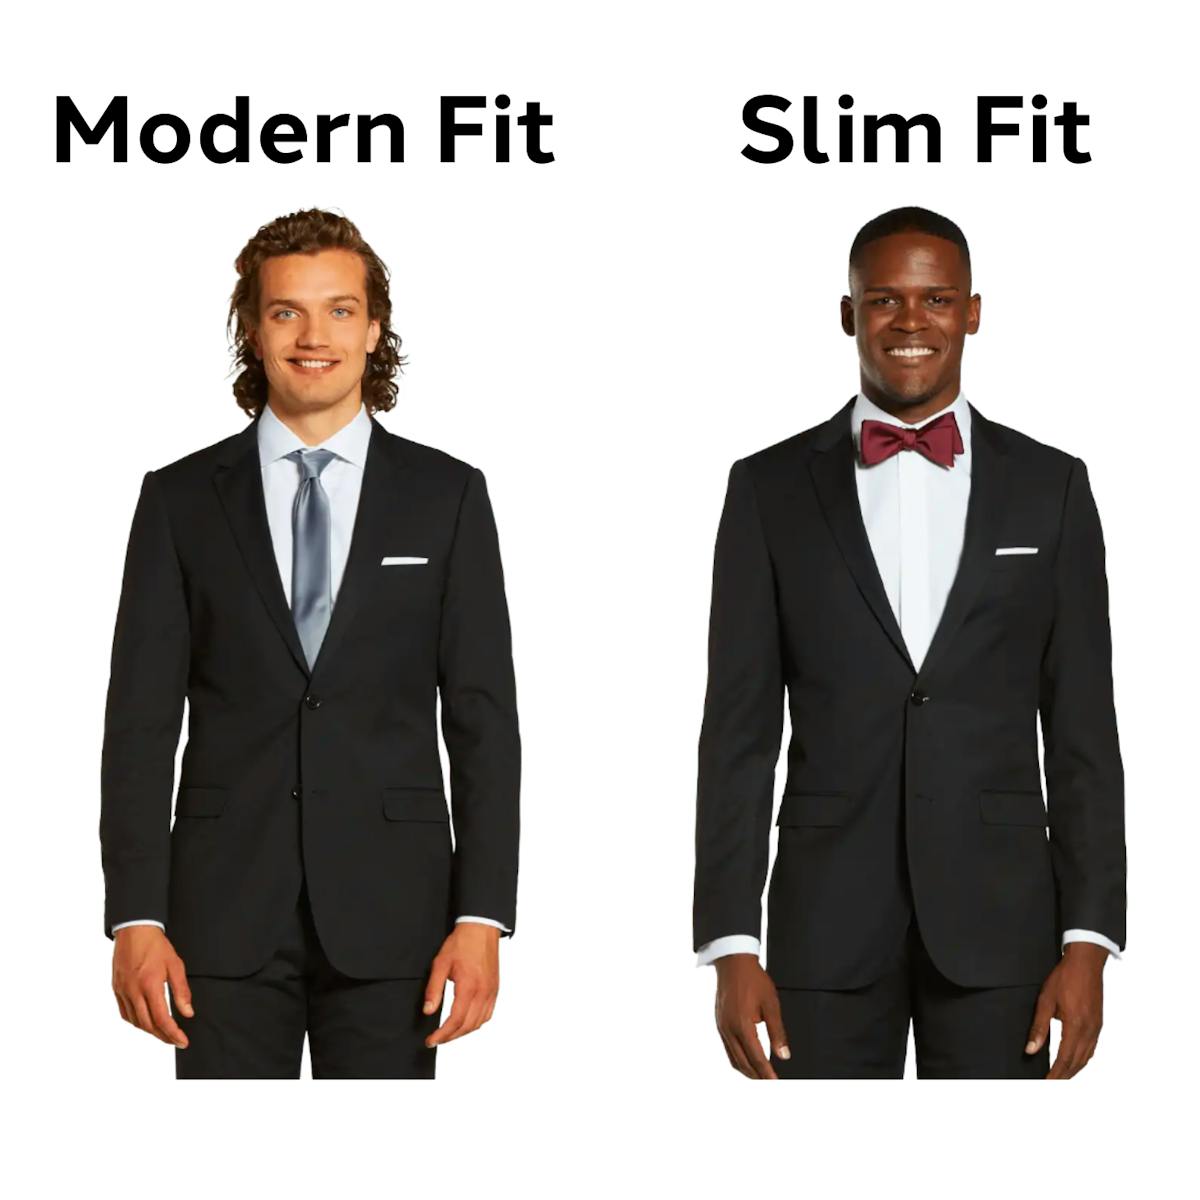 Sportcoats Fit Guide - Slim Fit vs Modern Fit Sportcoats